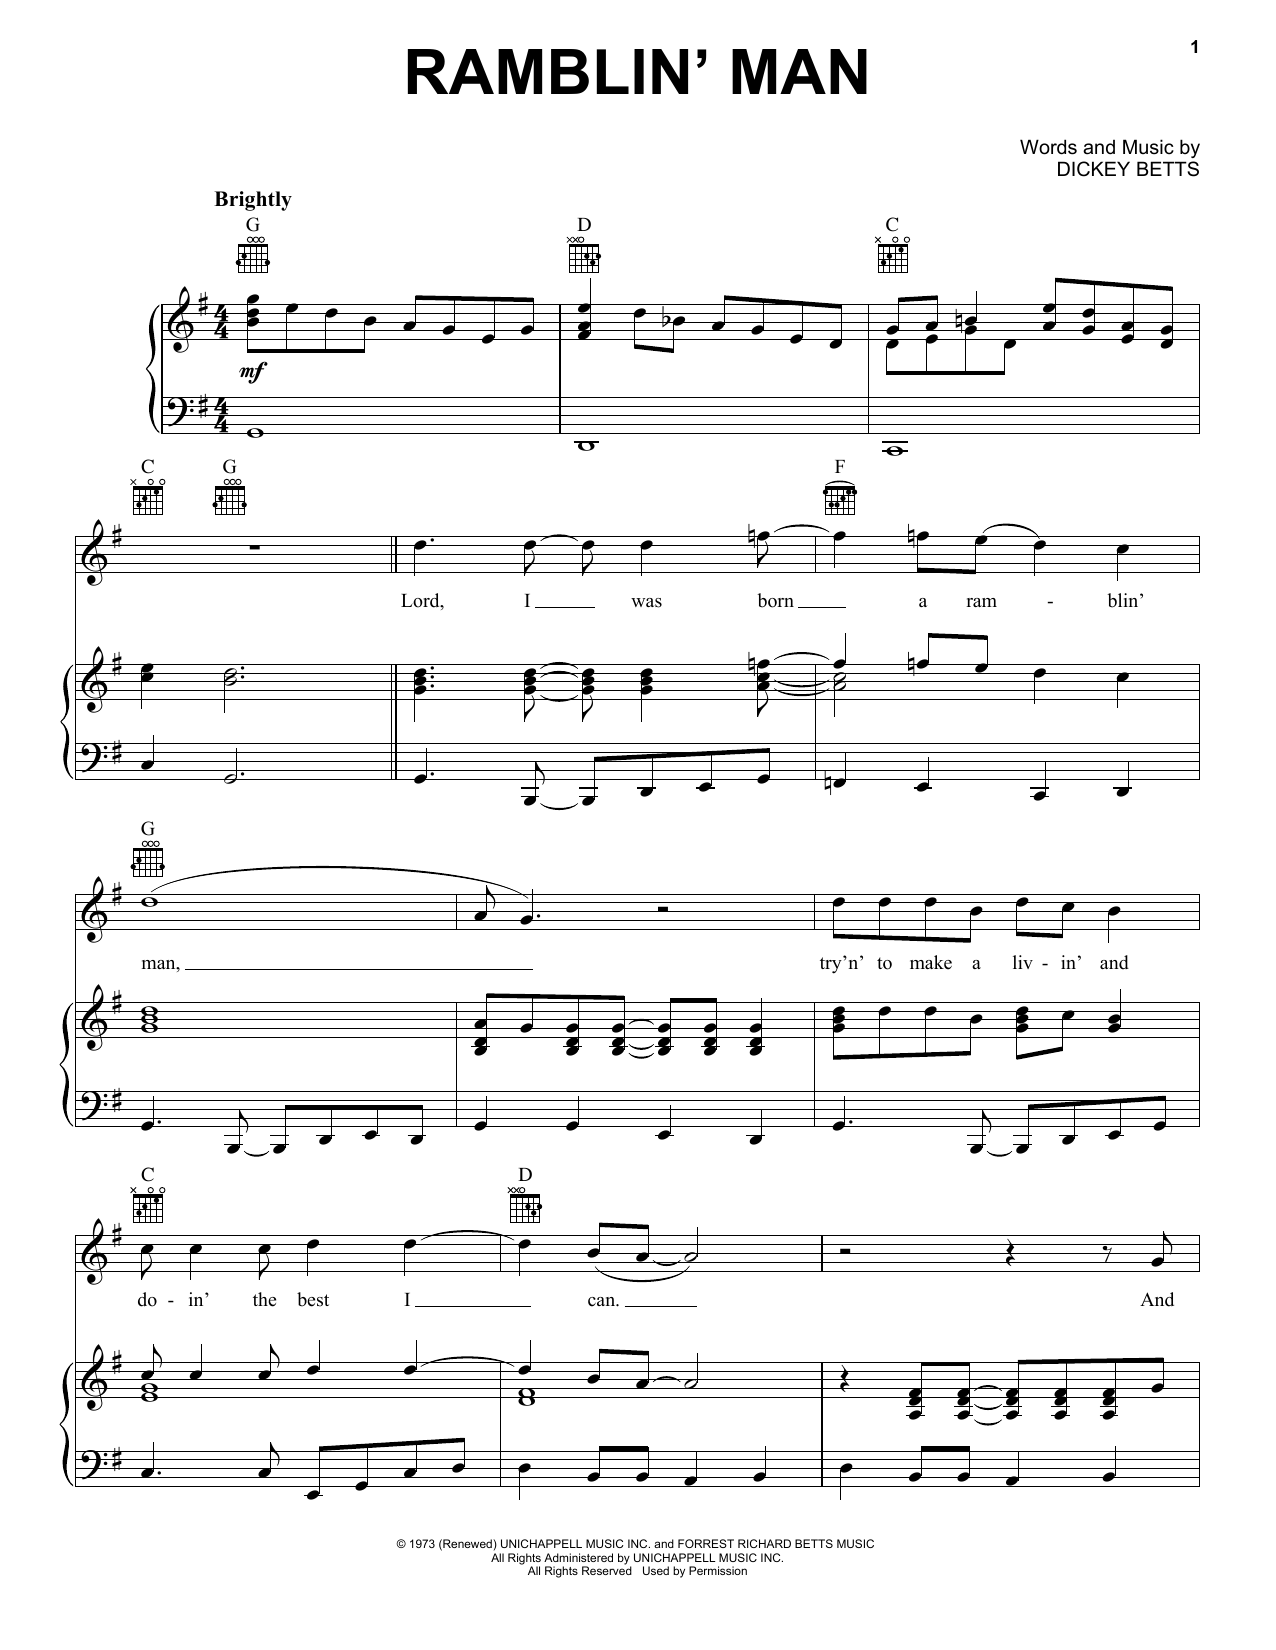 Allman Brothers Band Ramblin' Man Sheet Music Notes & Chords for Piano, Vocal & Guitar (Right-Hand Melody) - Download or Print PDF